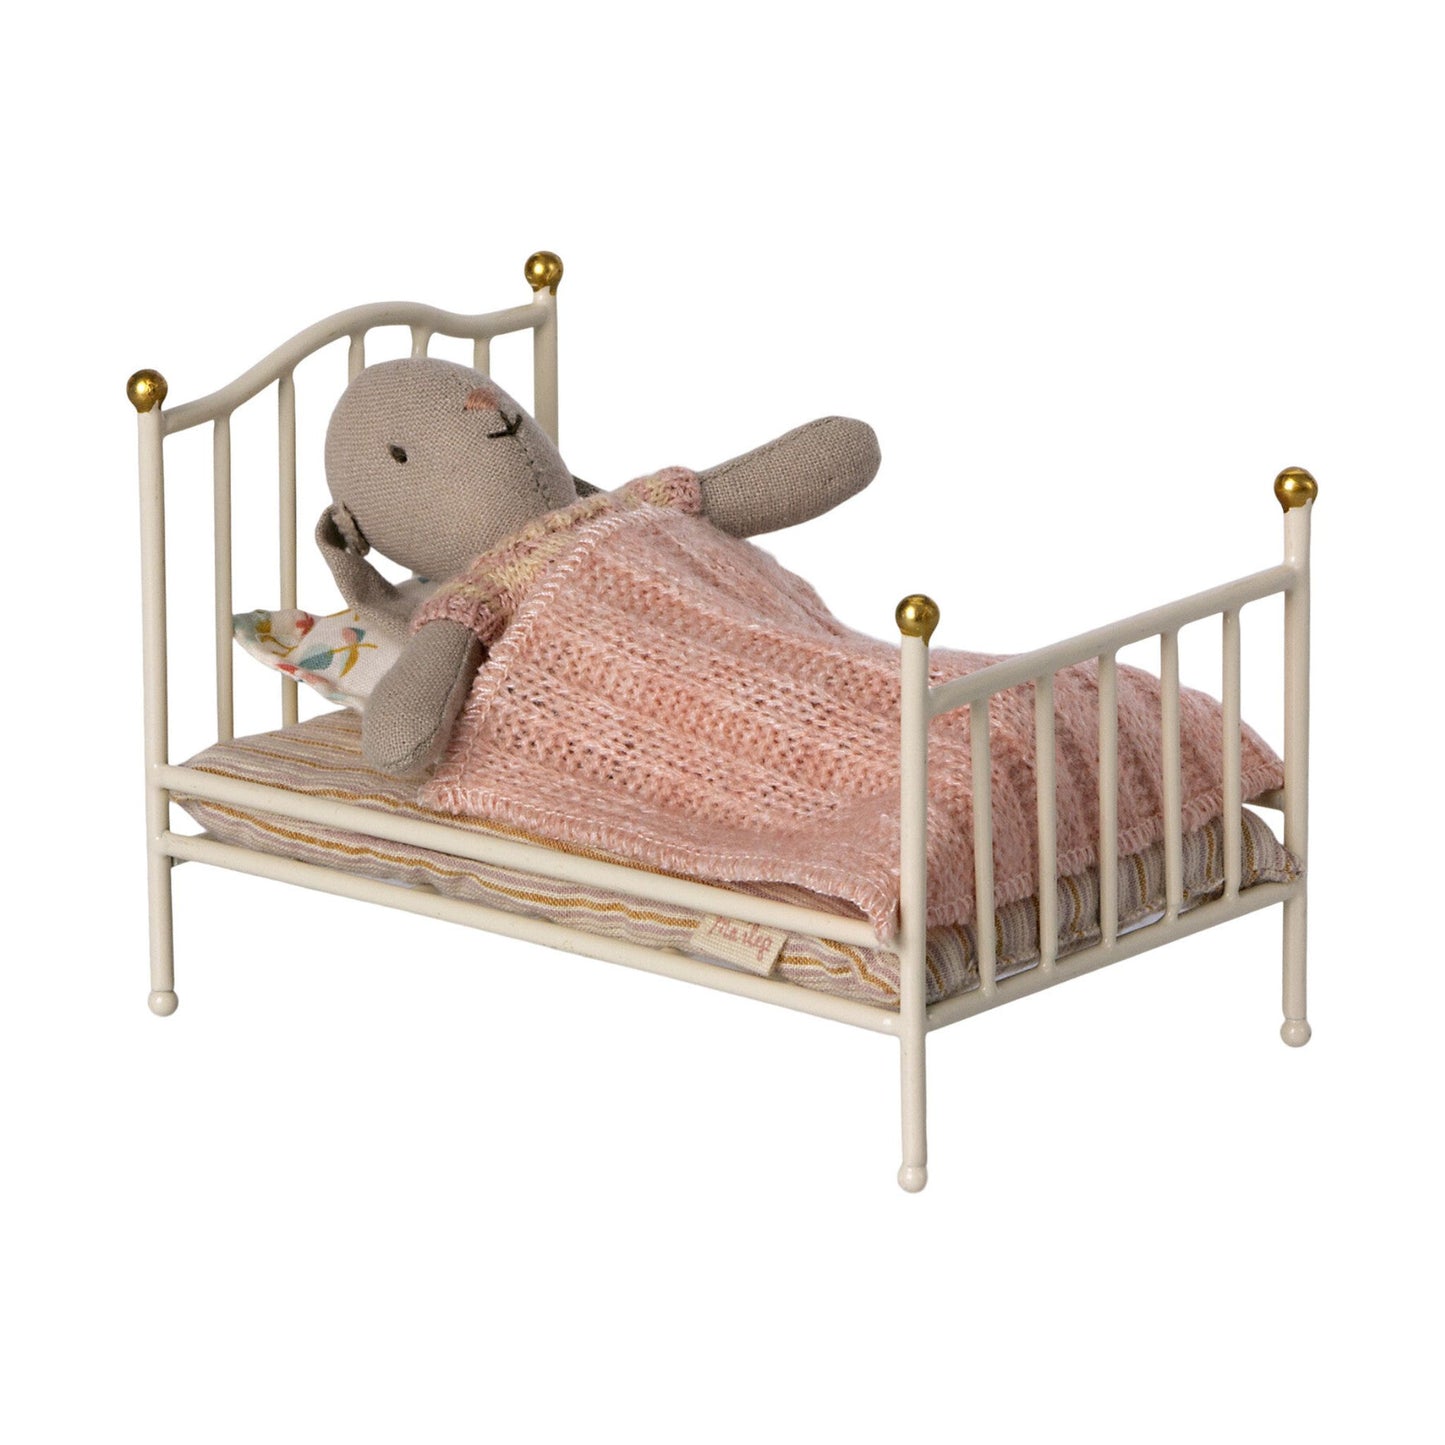 Vintage Bed, Mouse